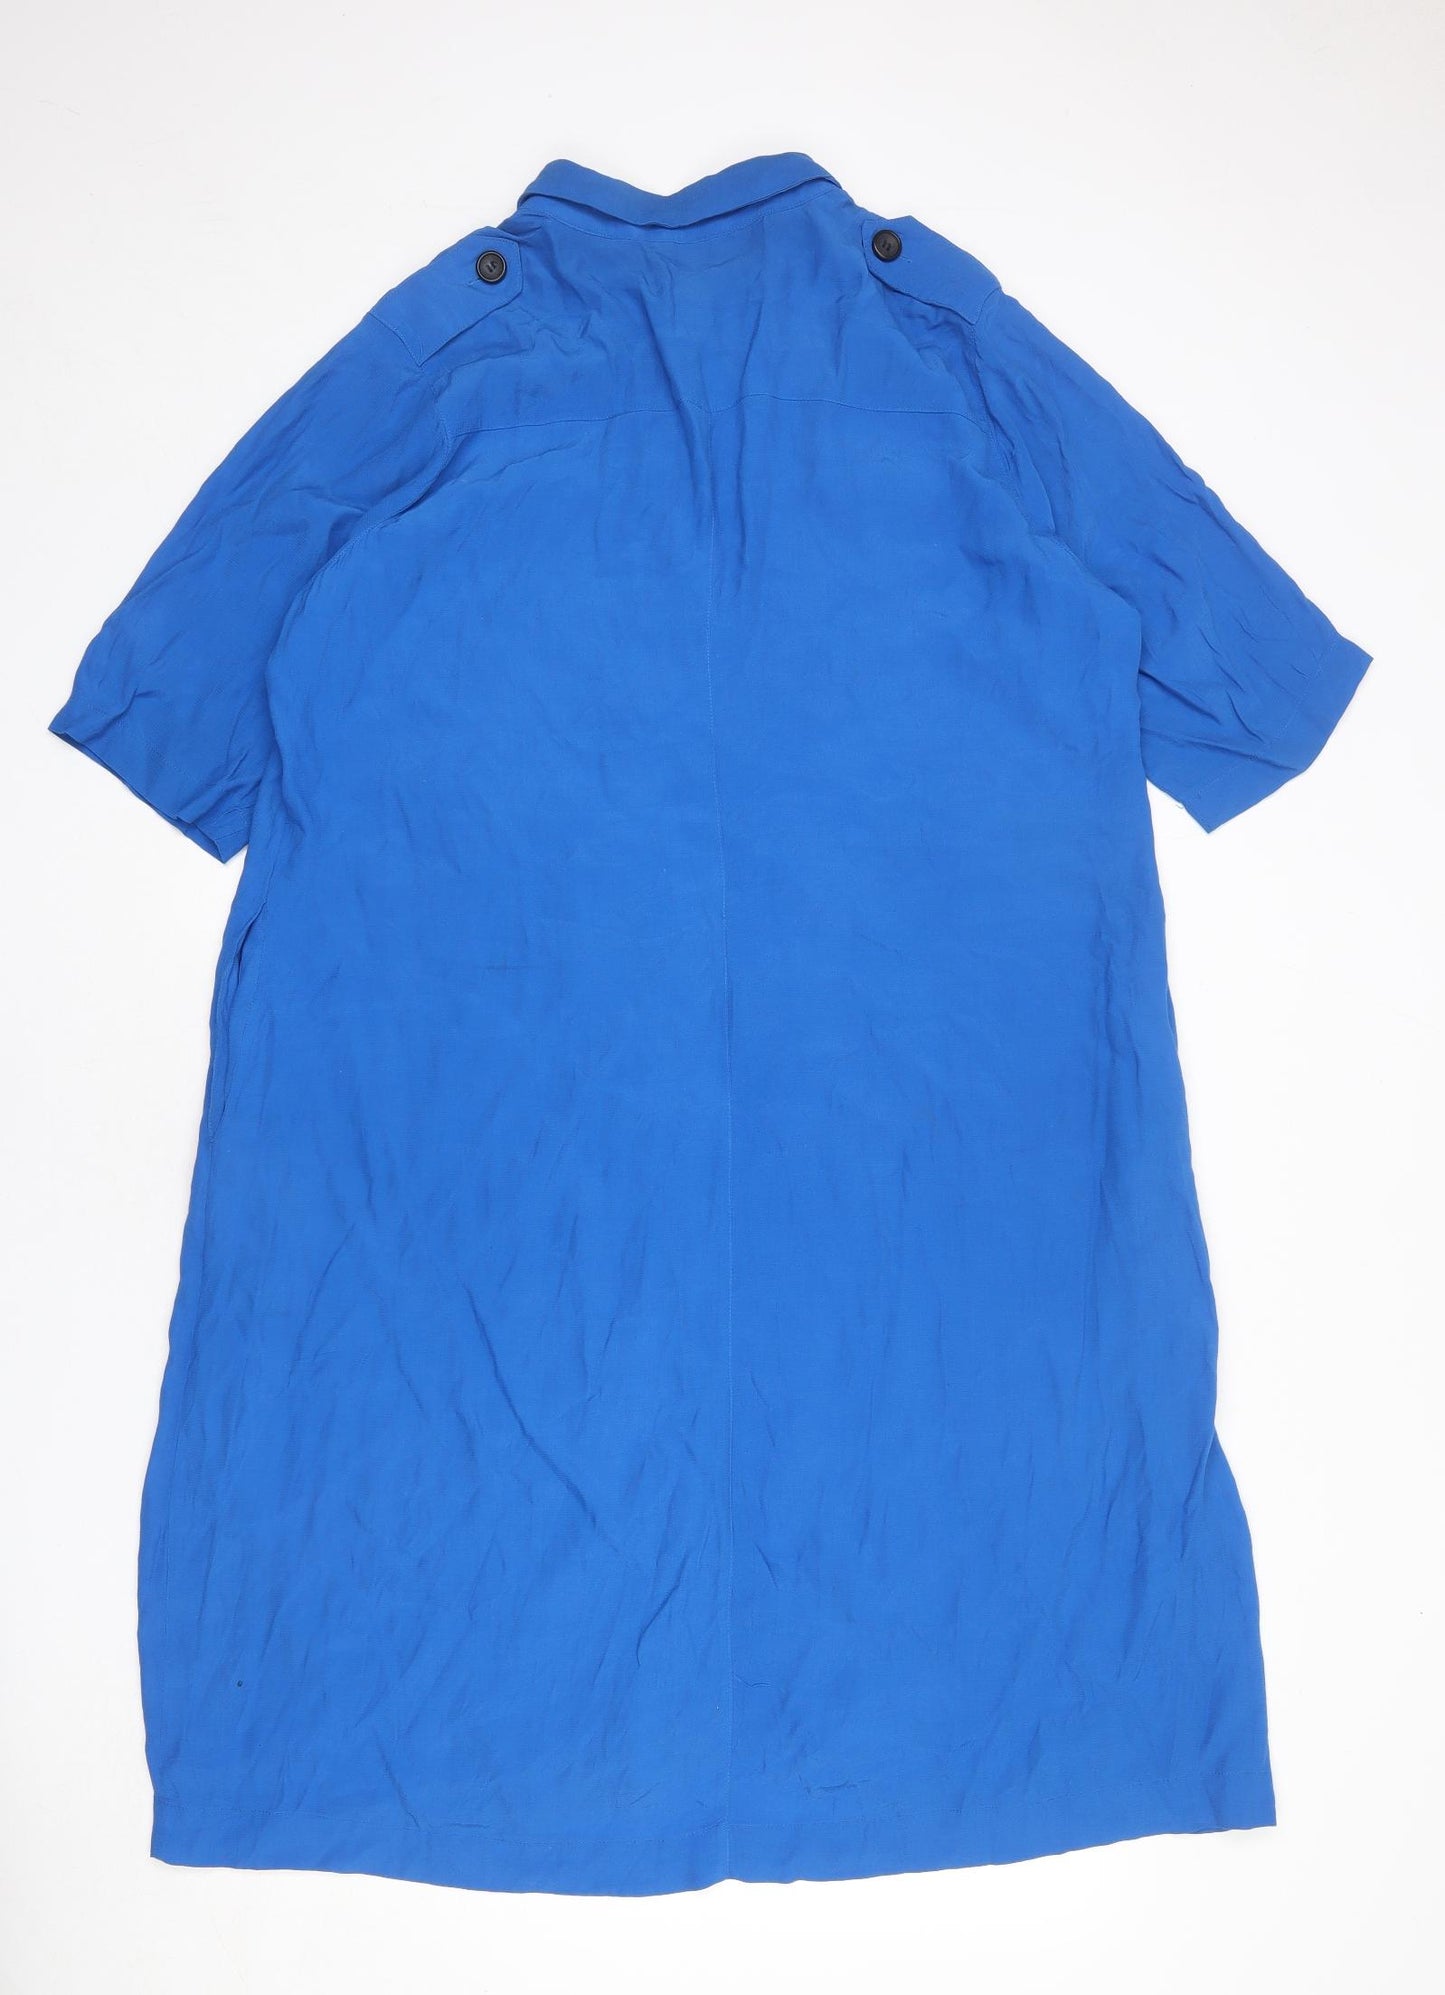 Monsoon Womens Blue Polyester Shirt Dress Size 16 Collared Button